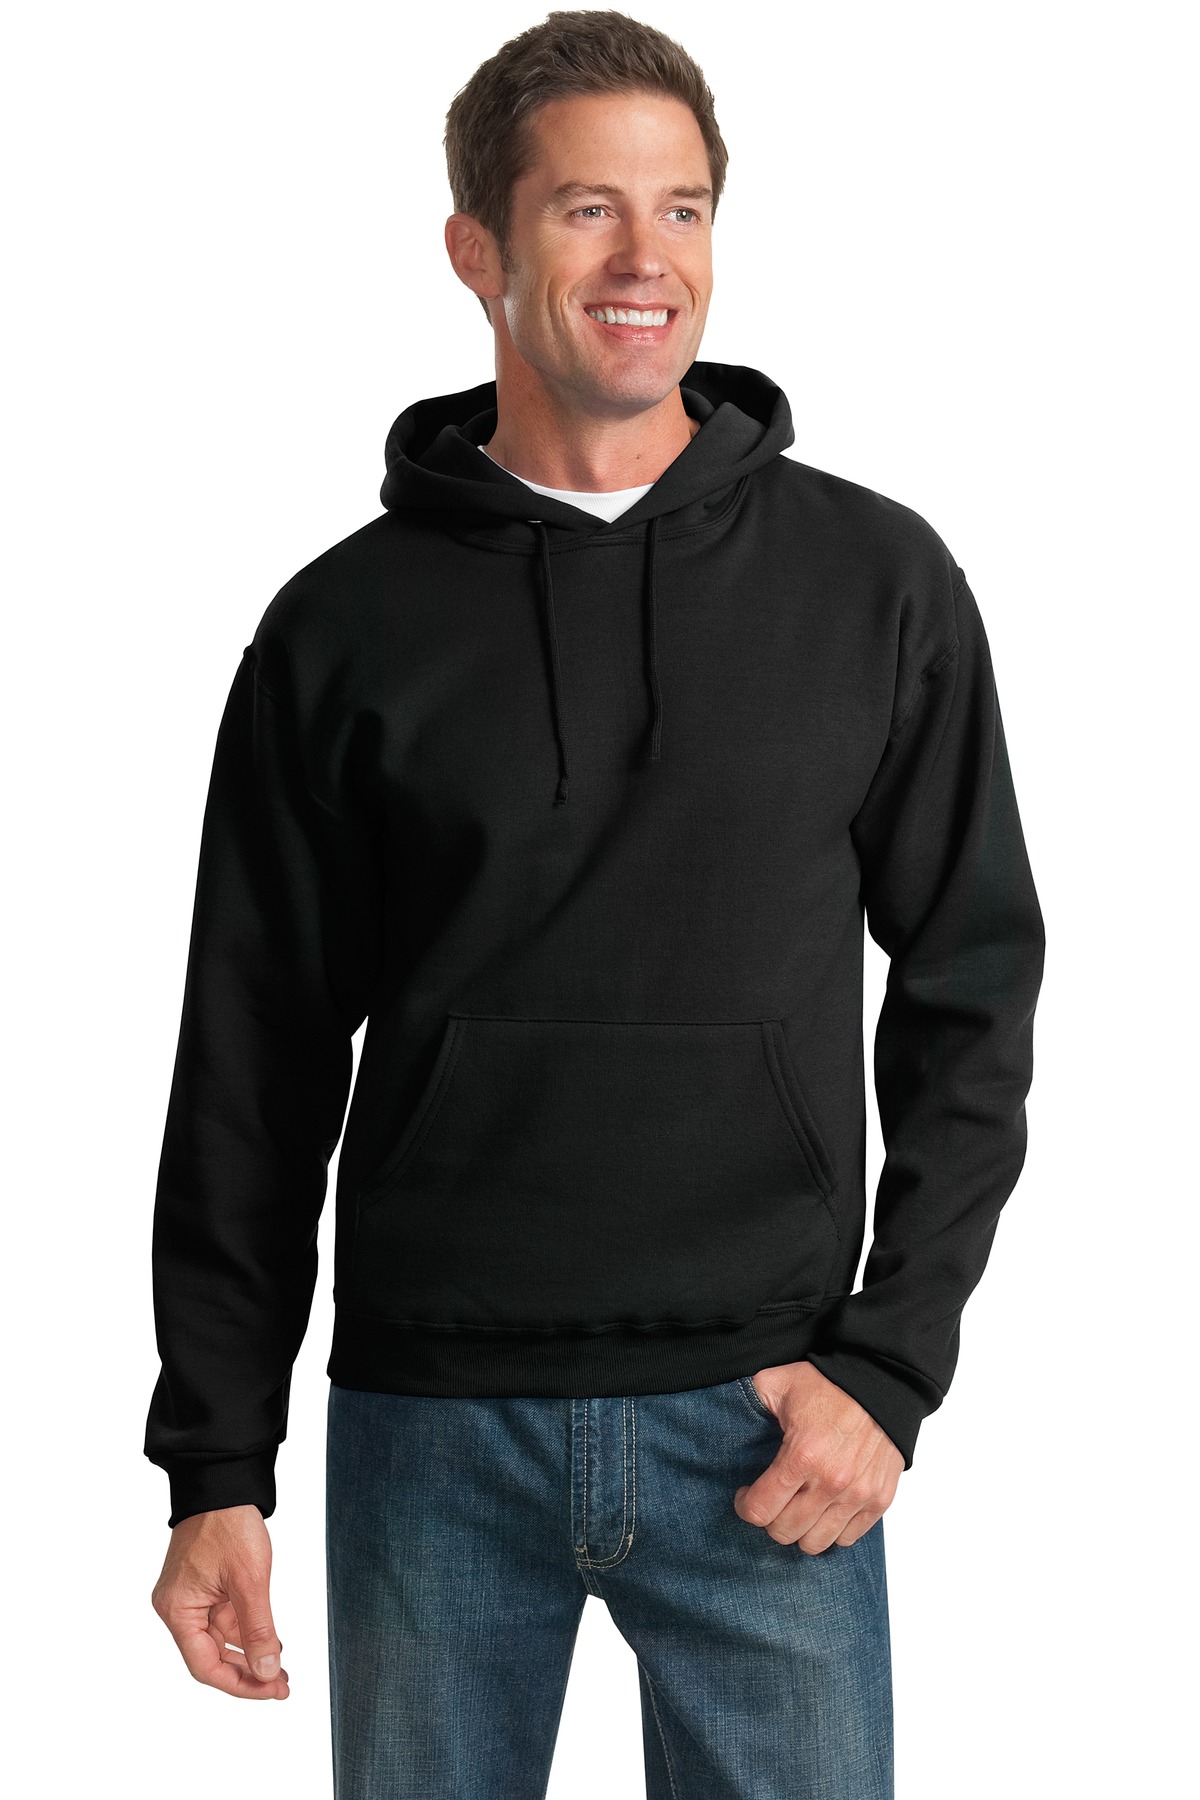 Jerzees® - NuBlend® Pullover Hooded Sweatshirt.-Jerzees